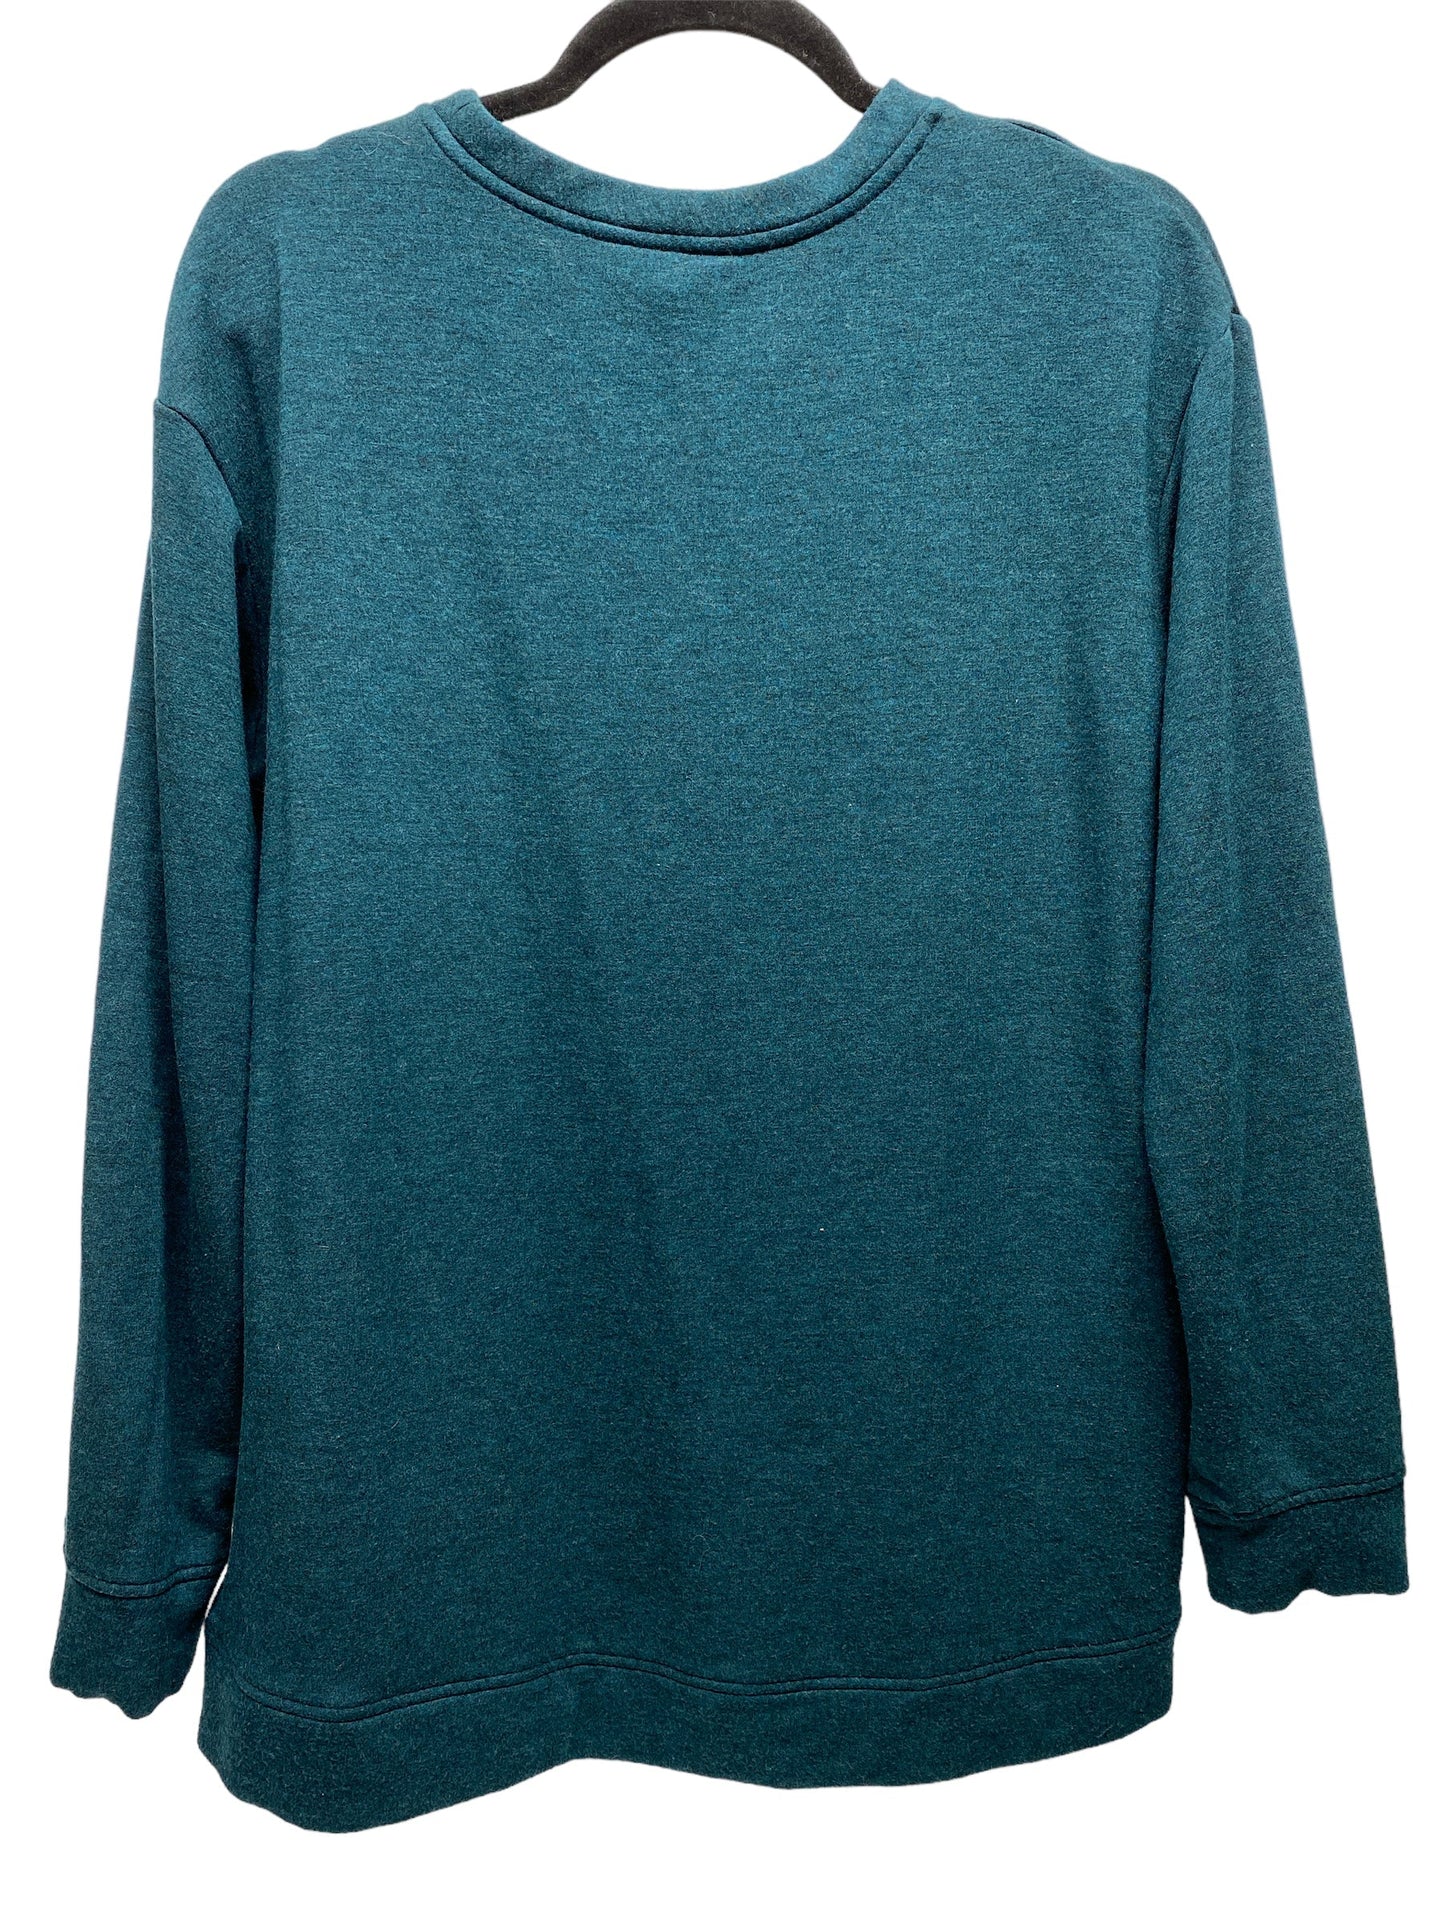 Sweatshirt Crewneck By Orvis  Size: M